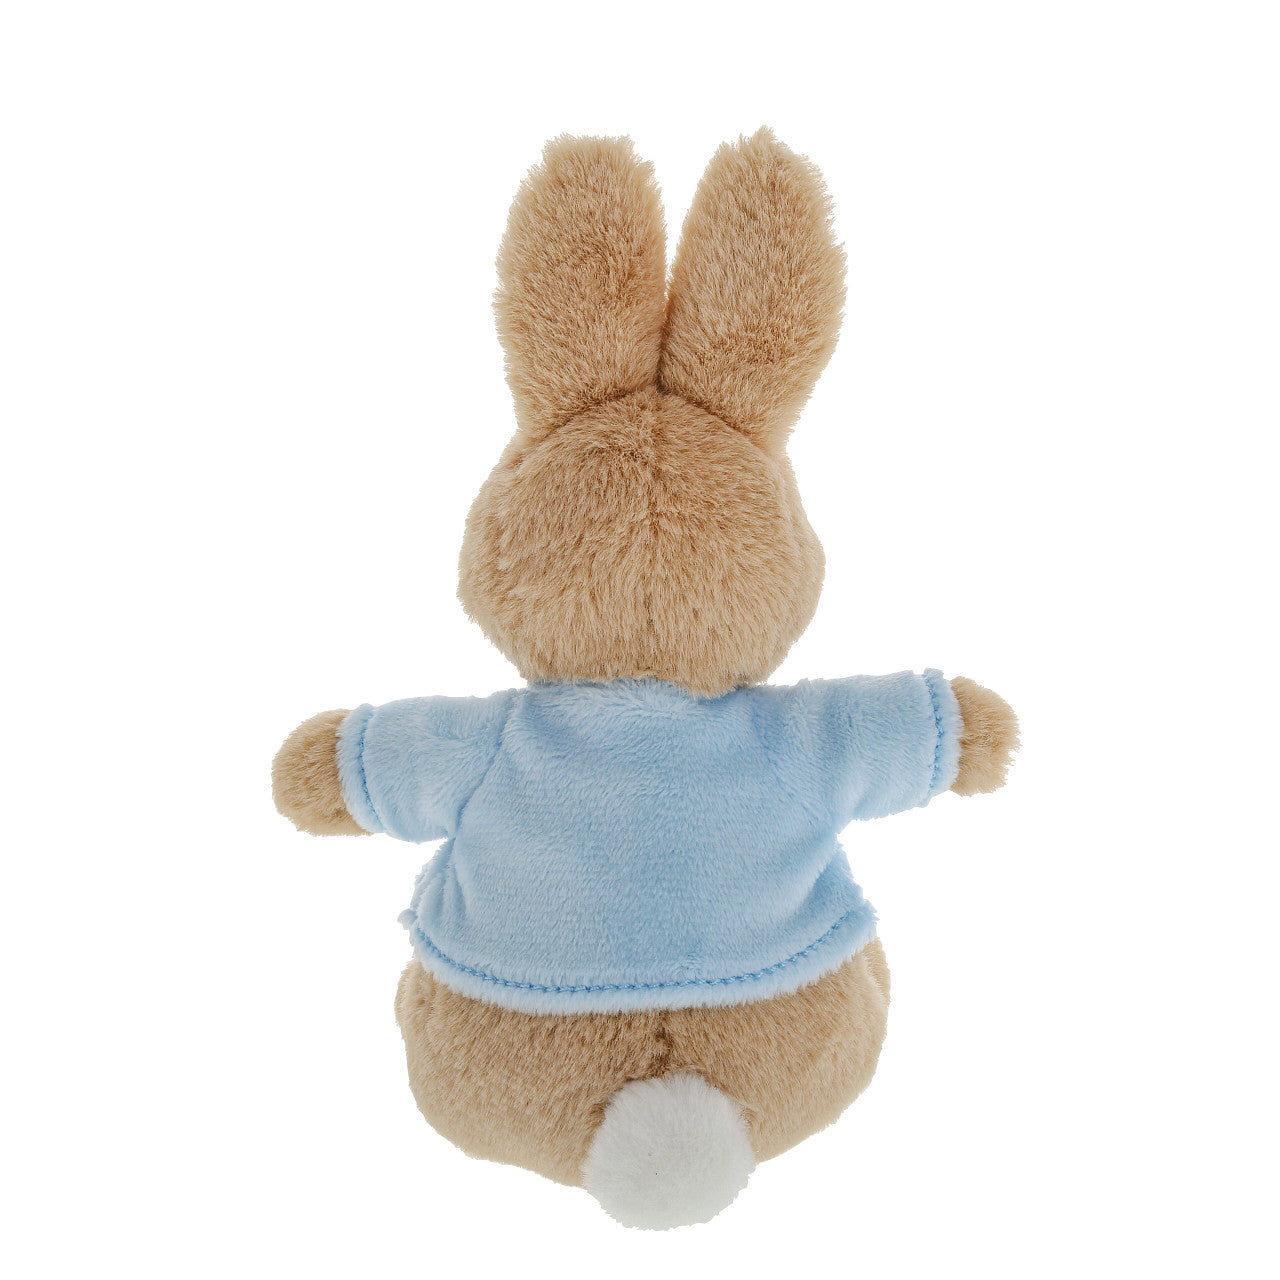 Peter Rabbit (Small)